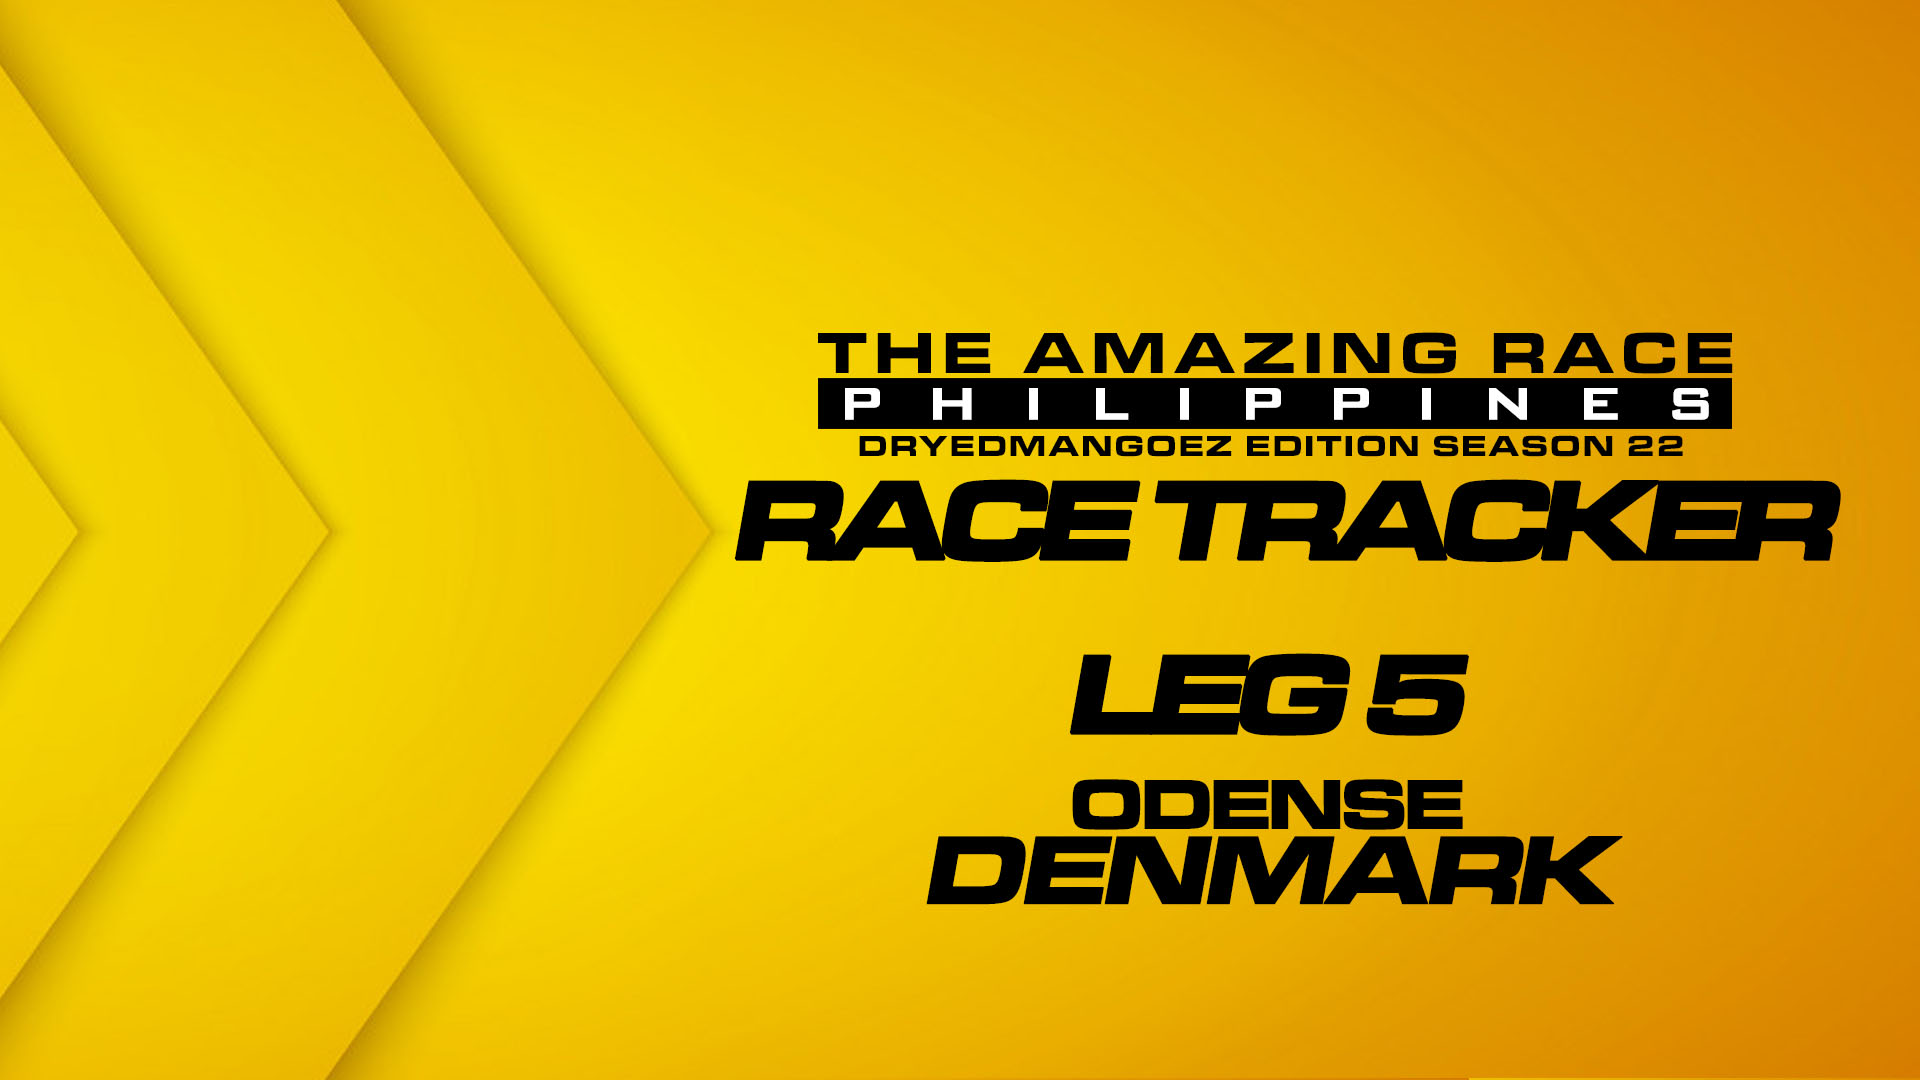 The Amazing Race Philippines: DryedMangoez Edition Season 22 Race Tracker – Leg 5